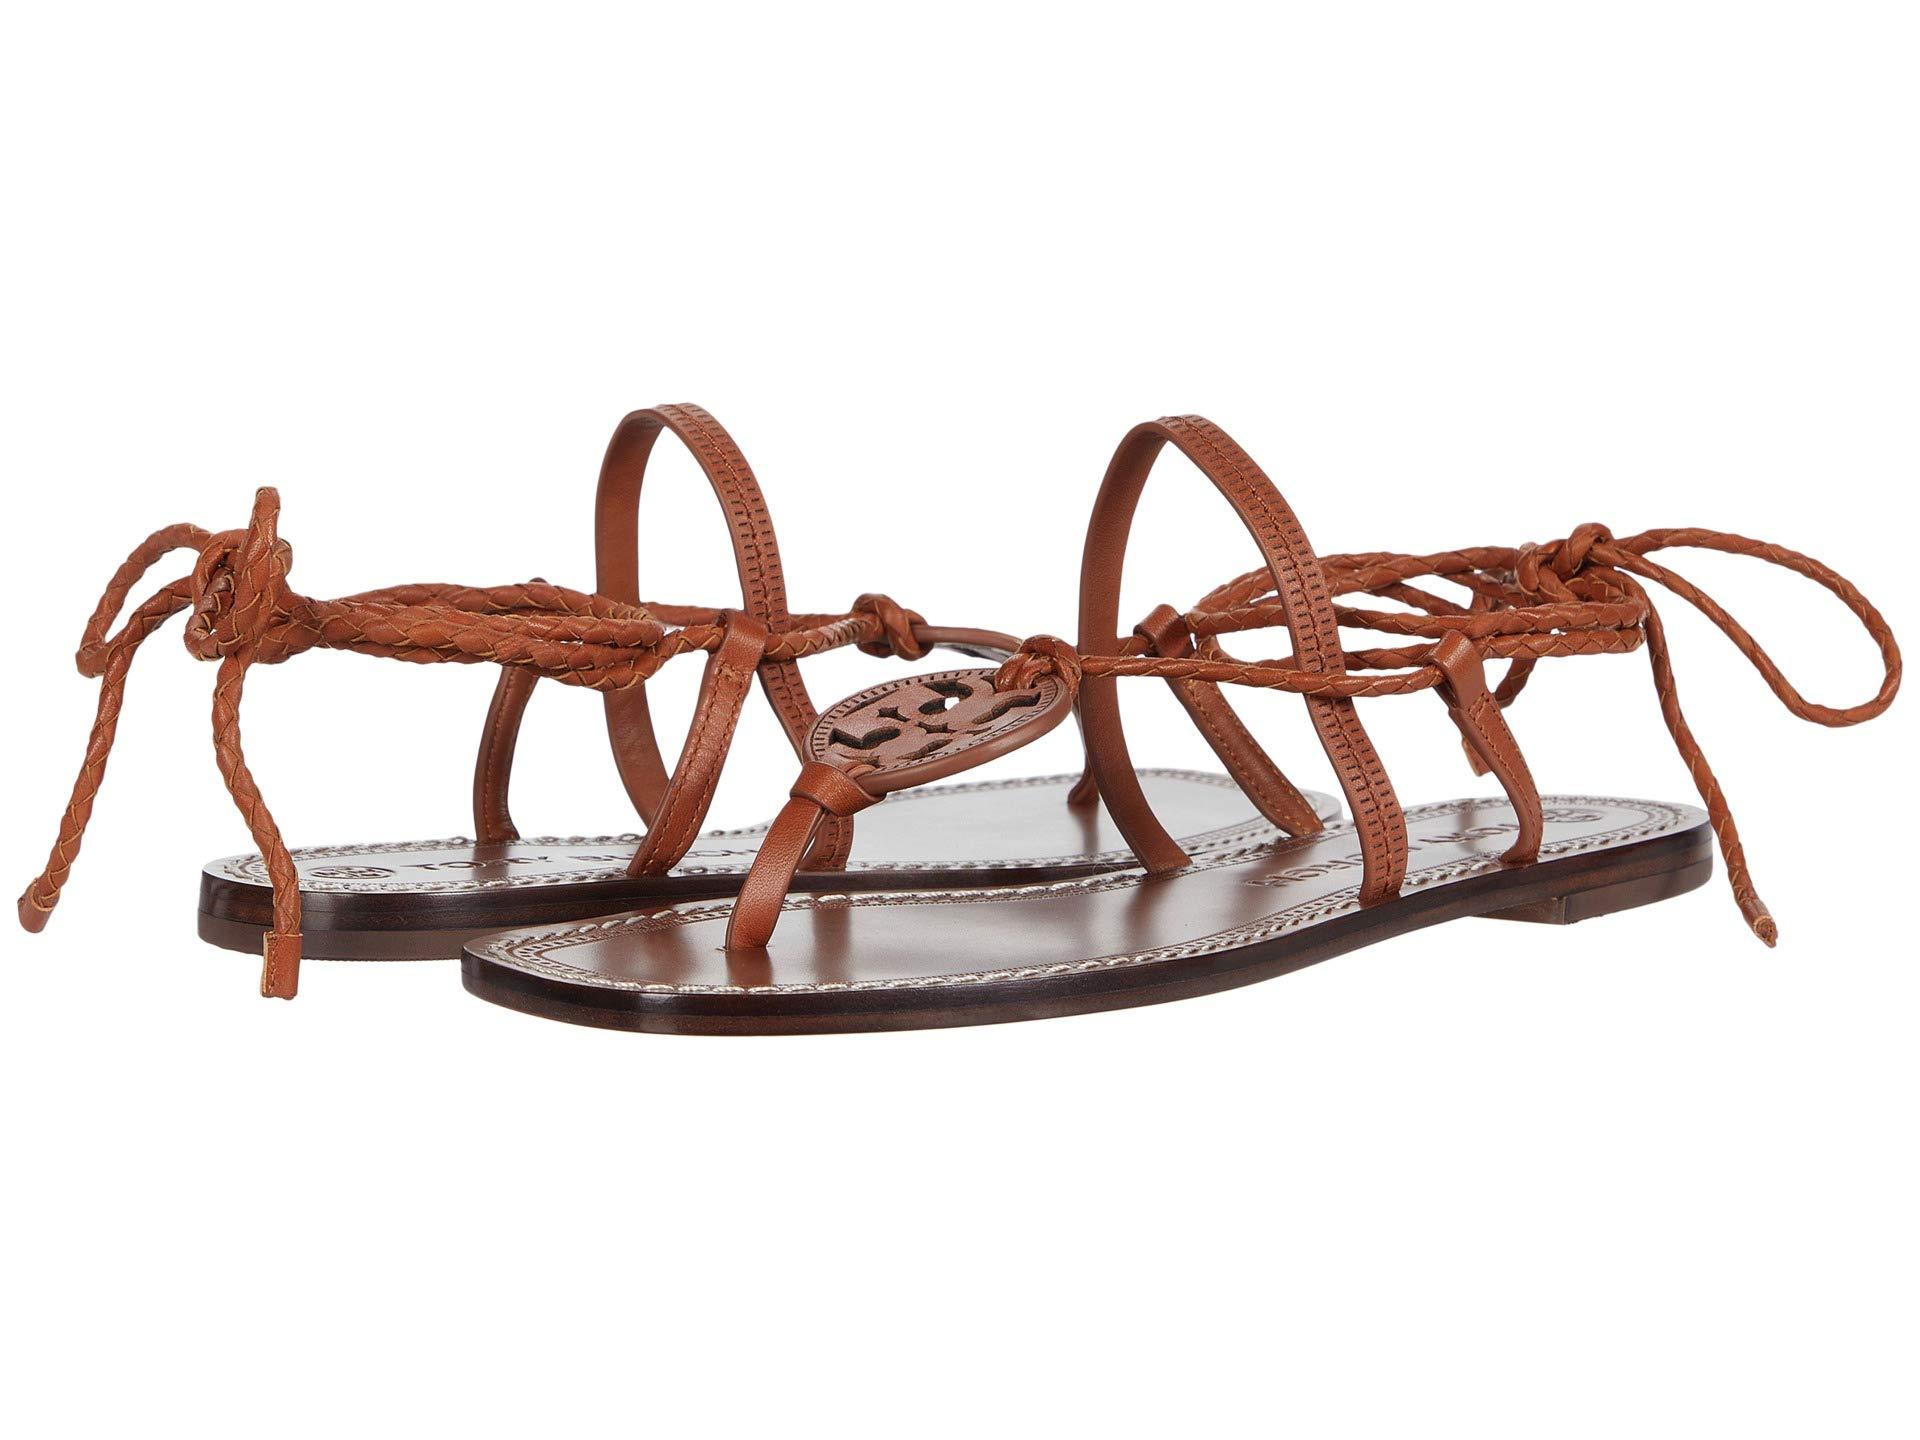 tory burch miller braided ankle tie logo sandal